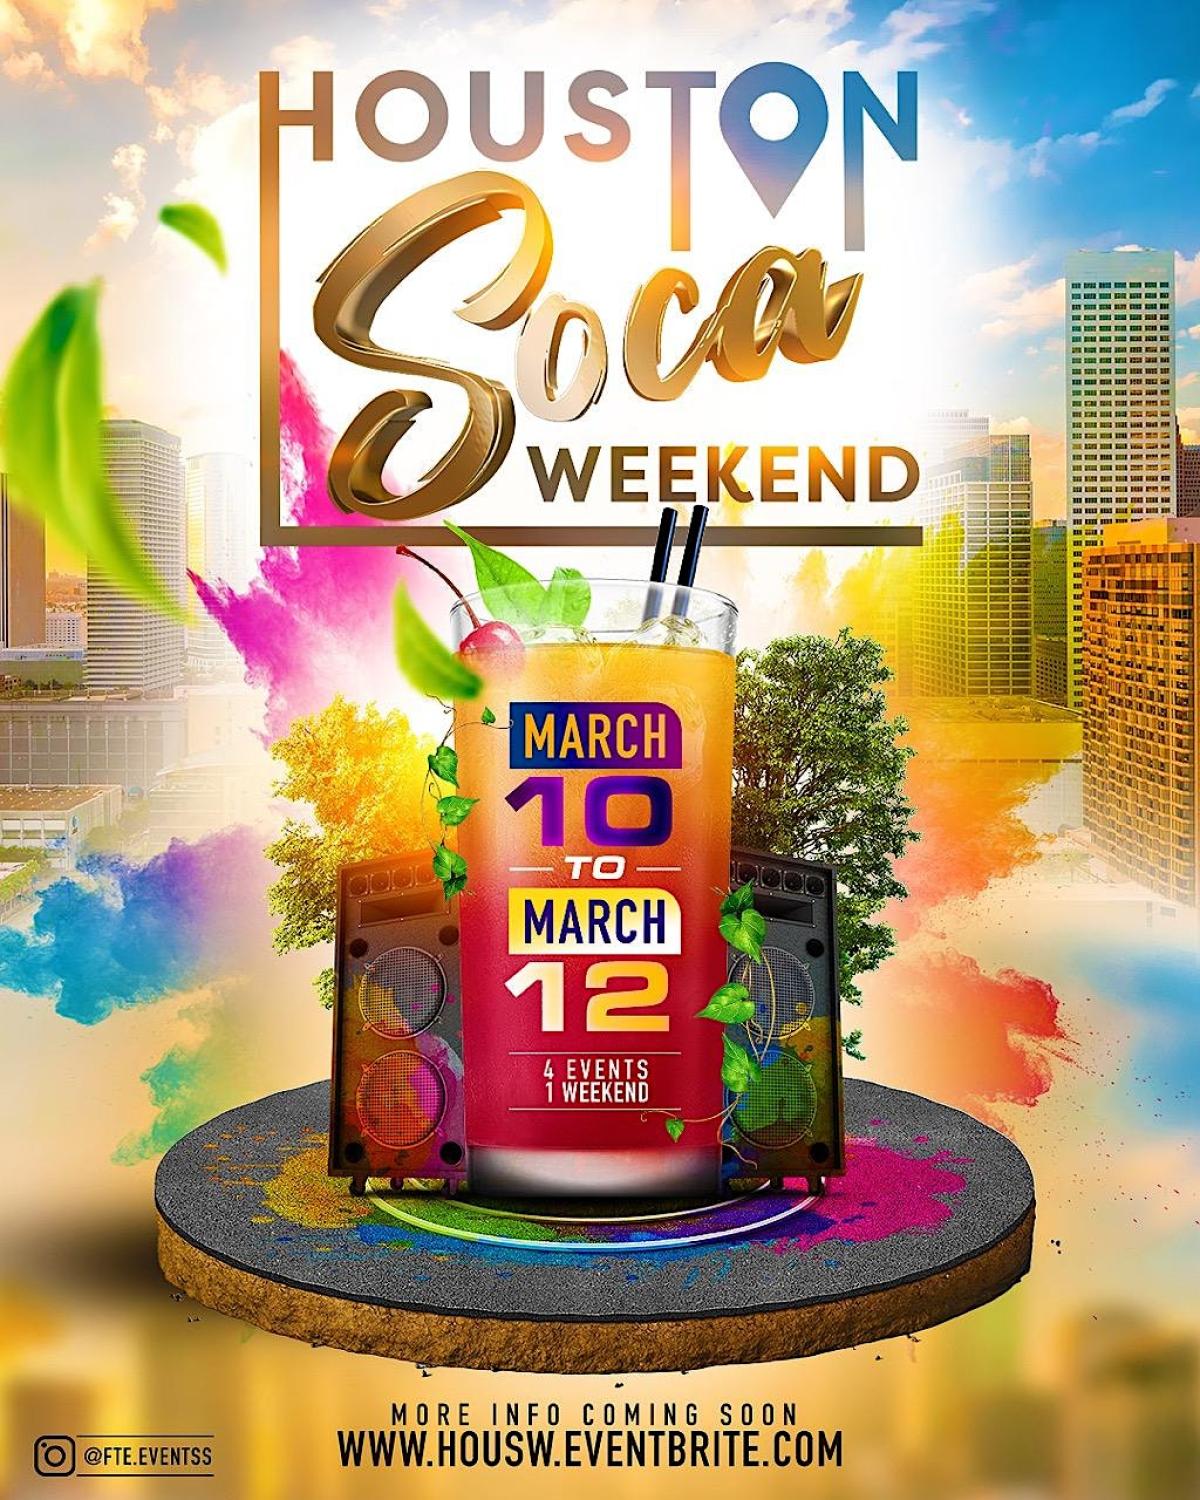 Houston Soca Weekend flyer or graphic.